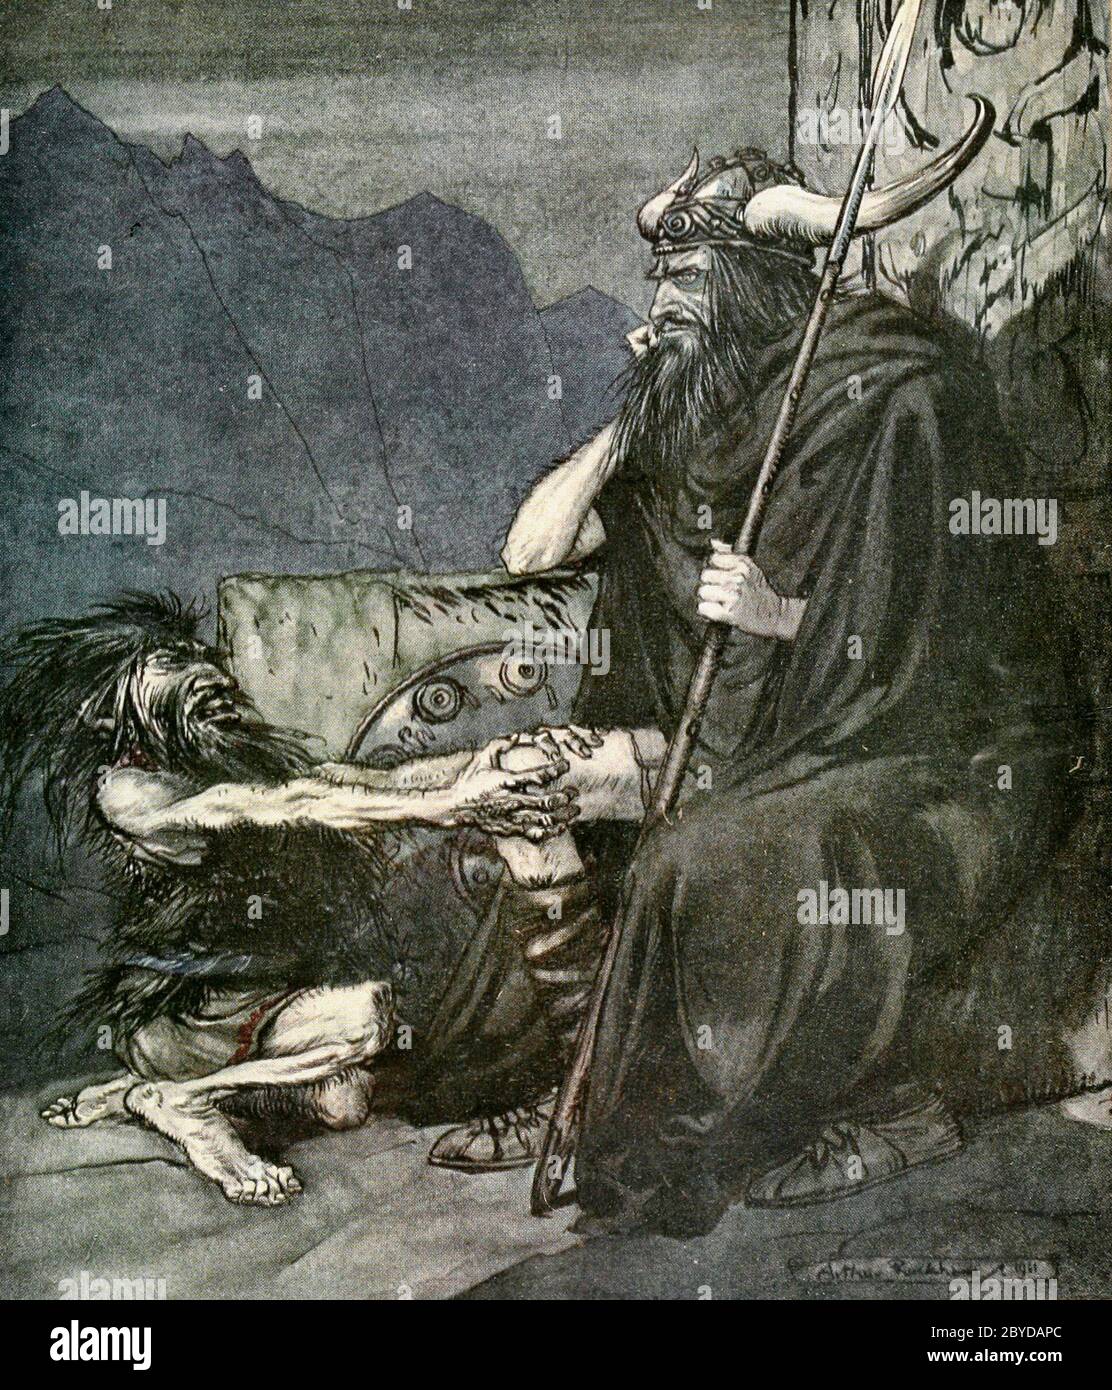 Swear to me Hagen, my son - from Twilight of the Gods - Arthur Rackham, 1911 Stock Photo